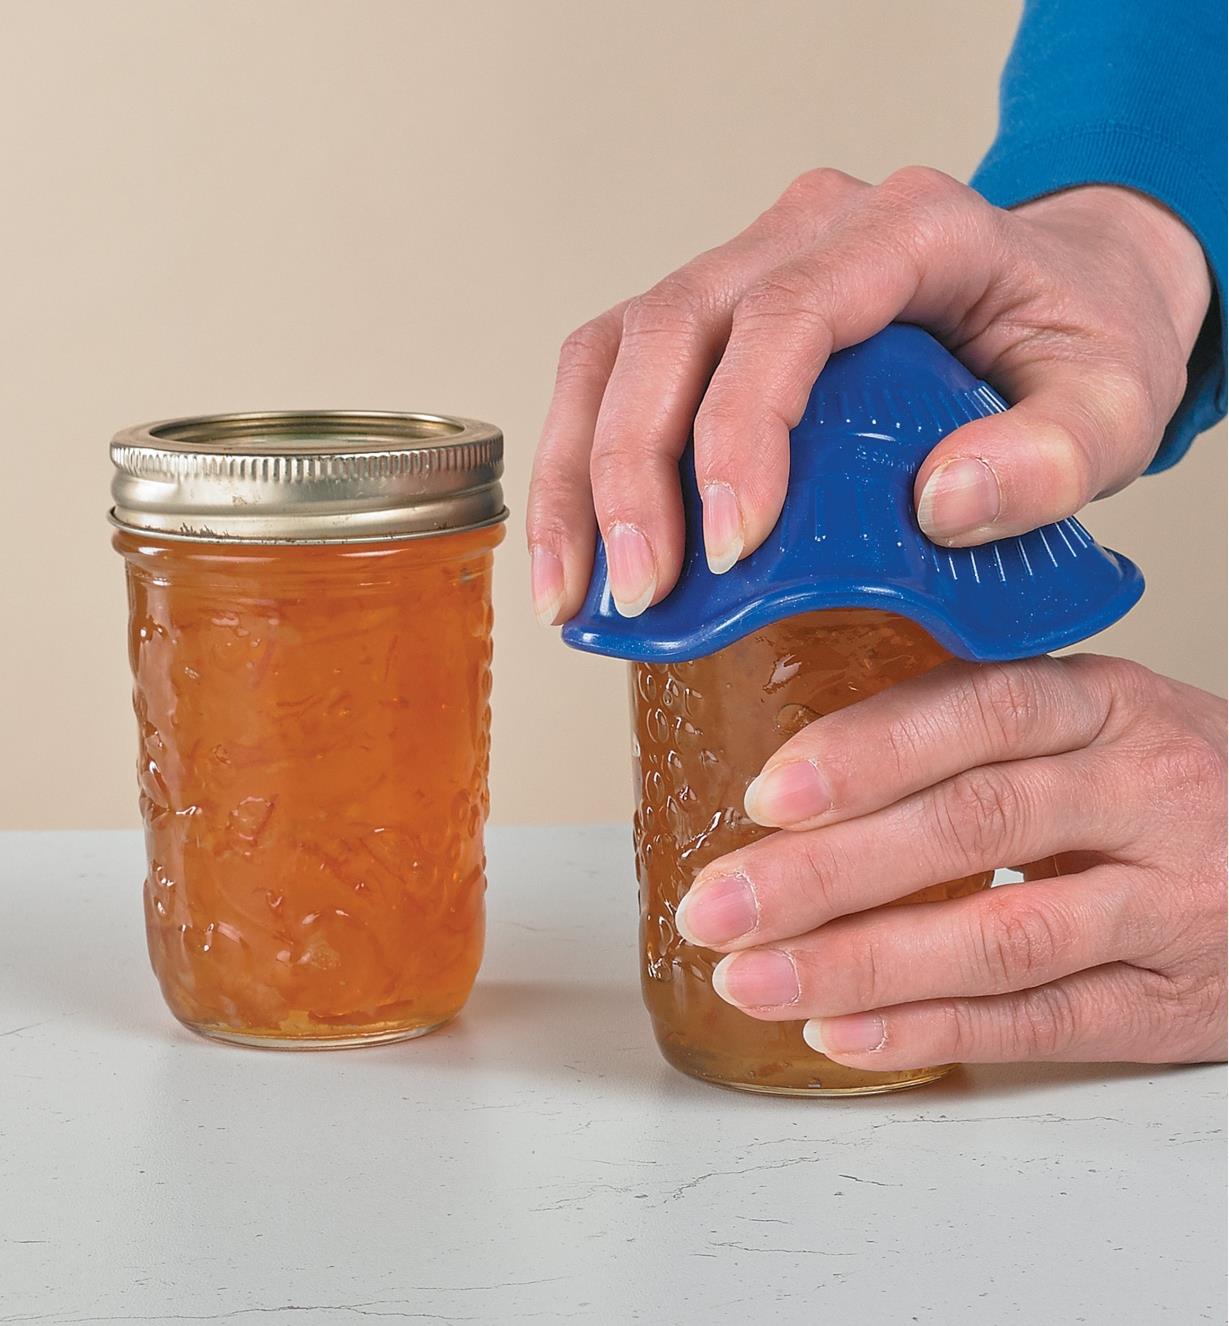 Using the Jar Opener to open a Mason jar